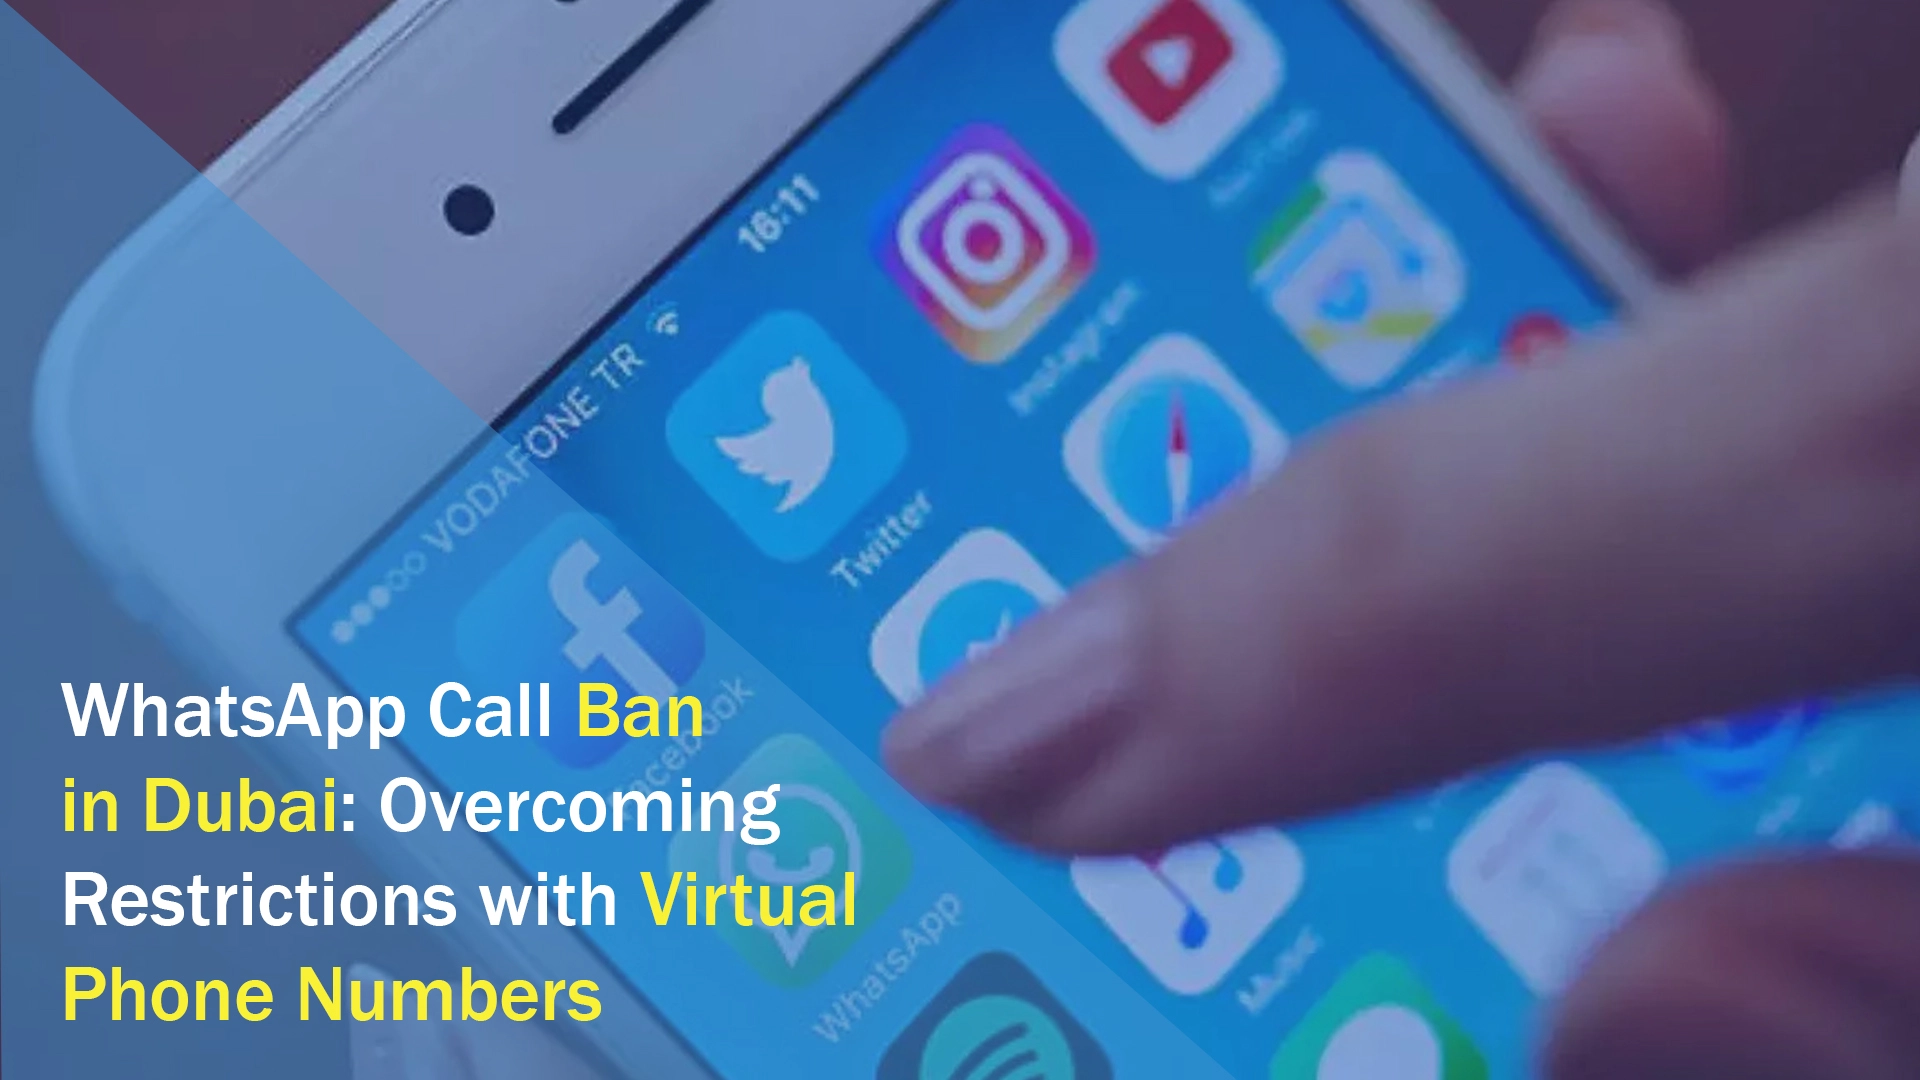 WhatsApp-Anruf in Dubai verboten